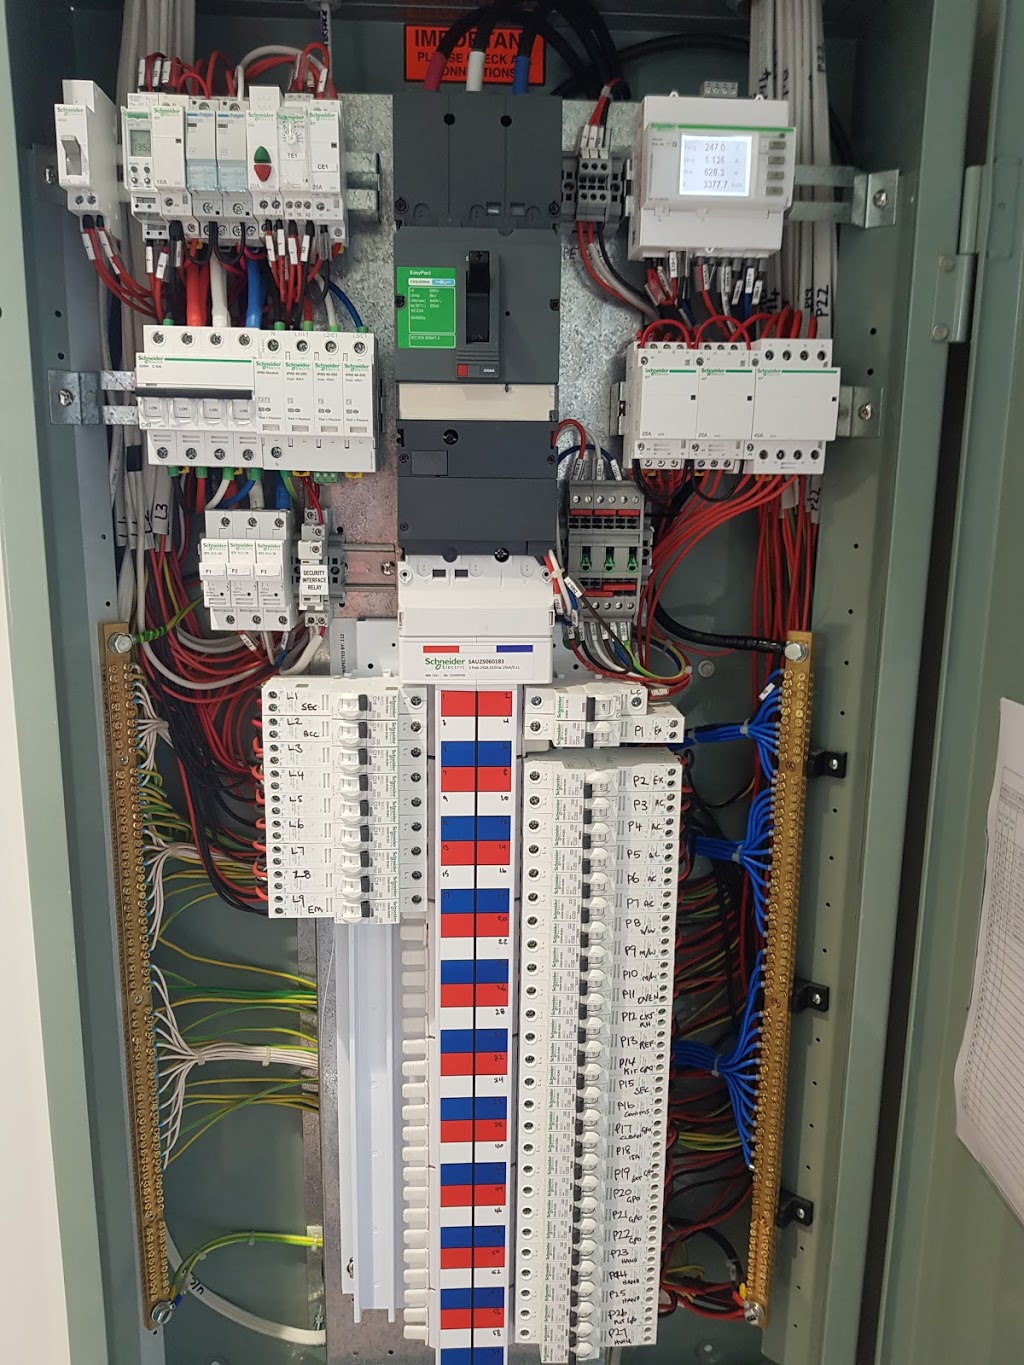 Plasma Electrical, Data & Air Conditioning Pty Ltd | electrician | 13 Kiama Cres, Ferny Hills QLD 4055, Australia | 0452275888 OR +61 452 275 888